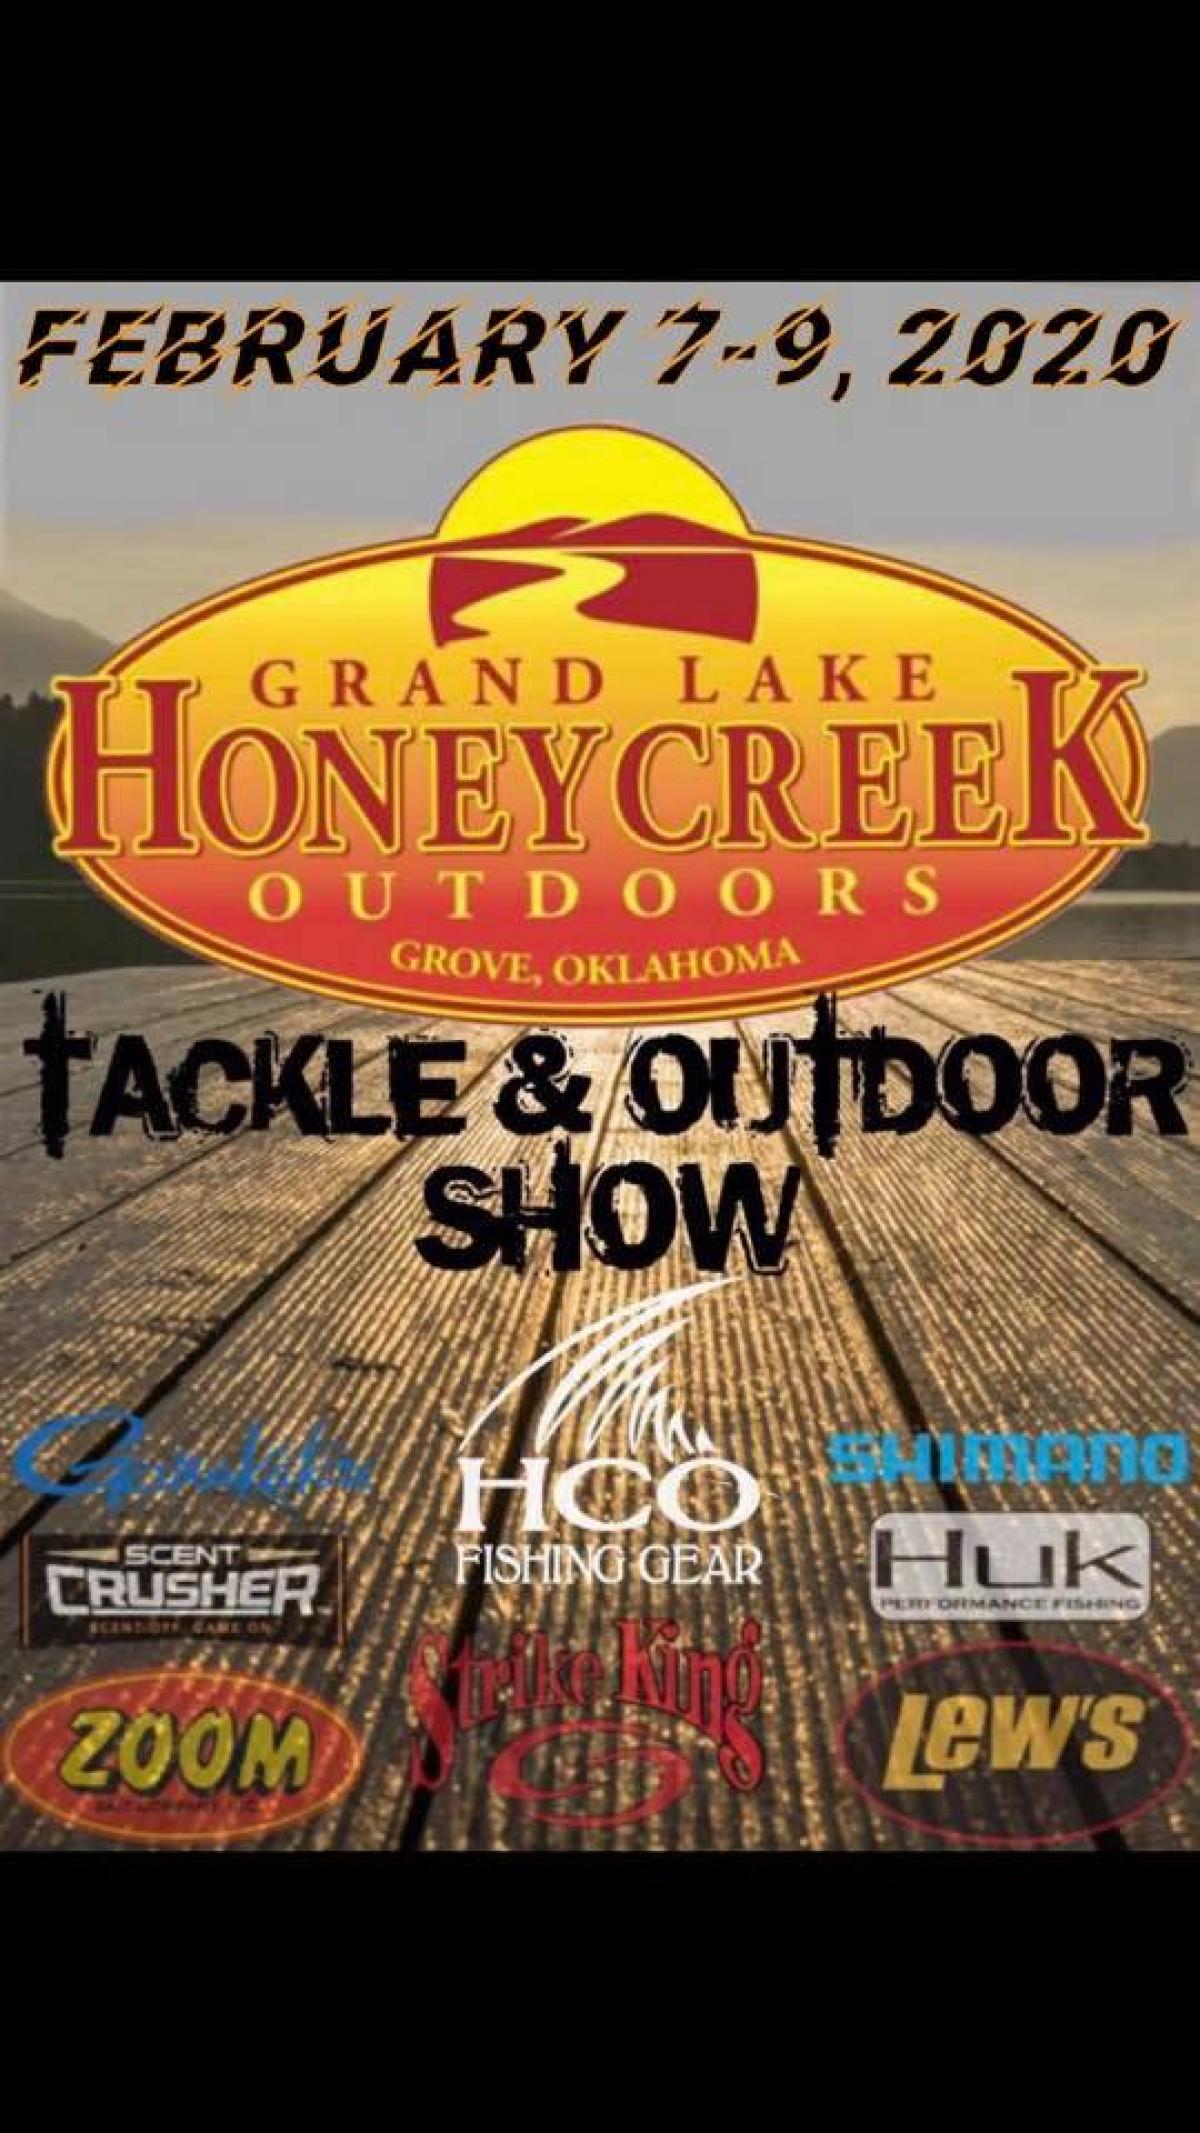 oklahoma, grove, honey creek outdoors tackle show